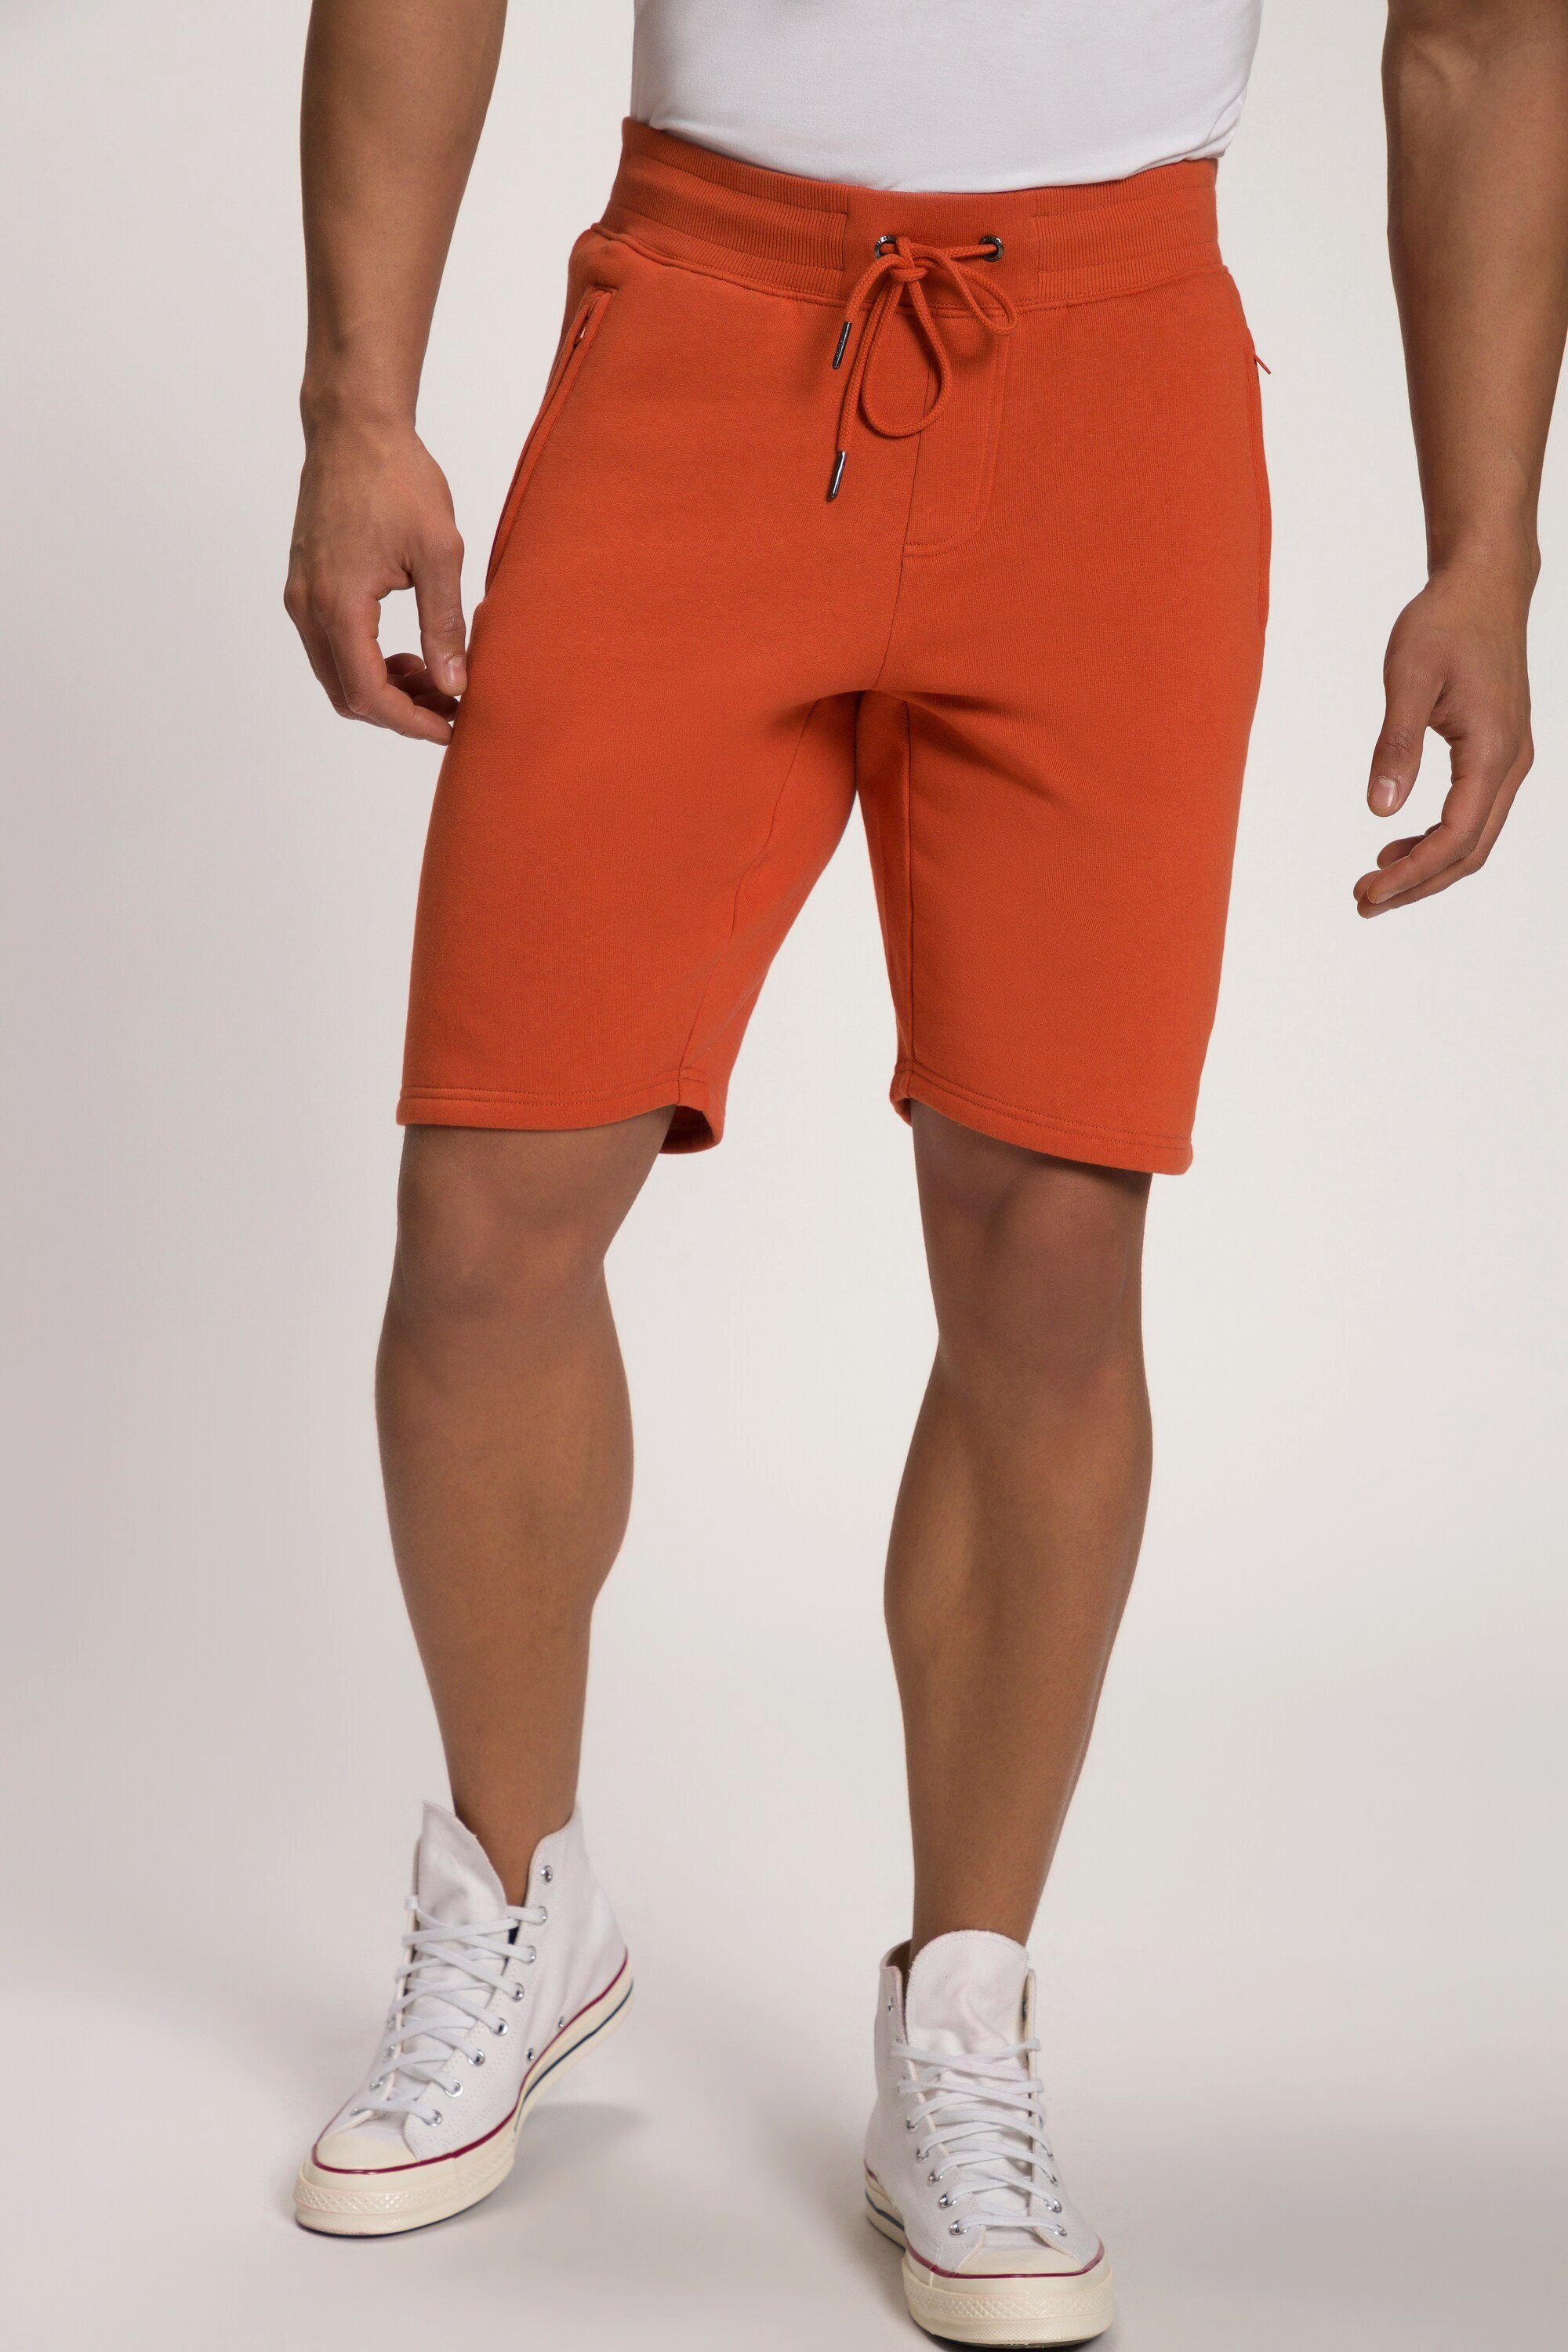 Elastibund Bermudas Homewear JP1880 Sweat-Bermuda orange XL 8 bis